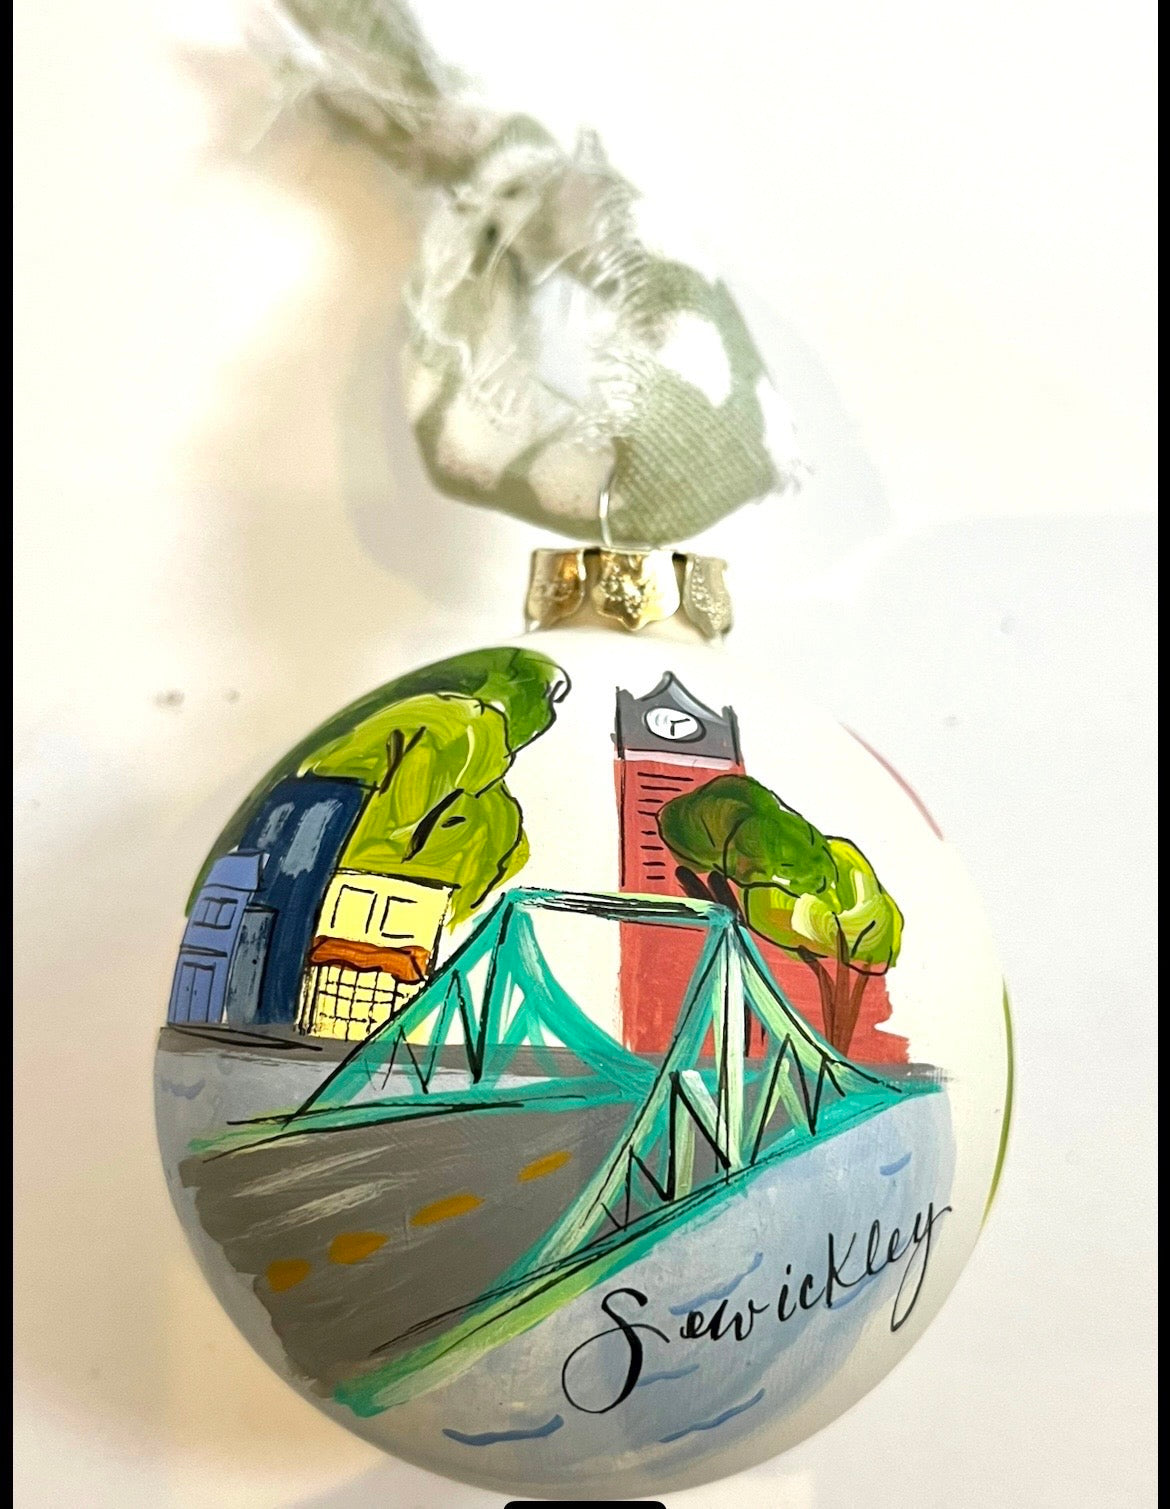 Rachel Lucia Hand Painted Ornaments (5 Designs)